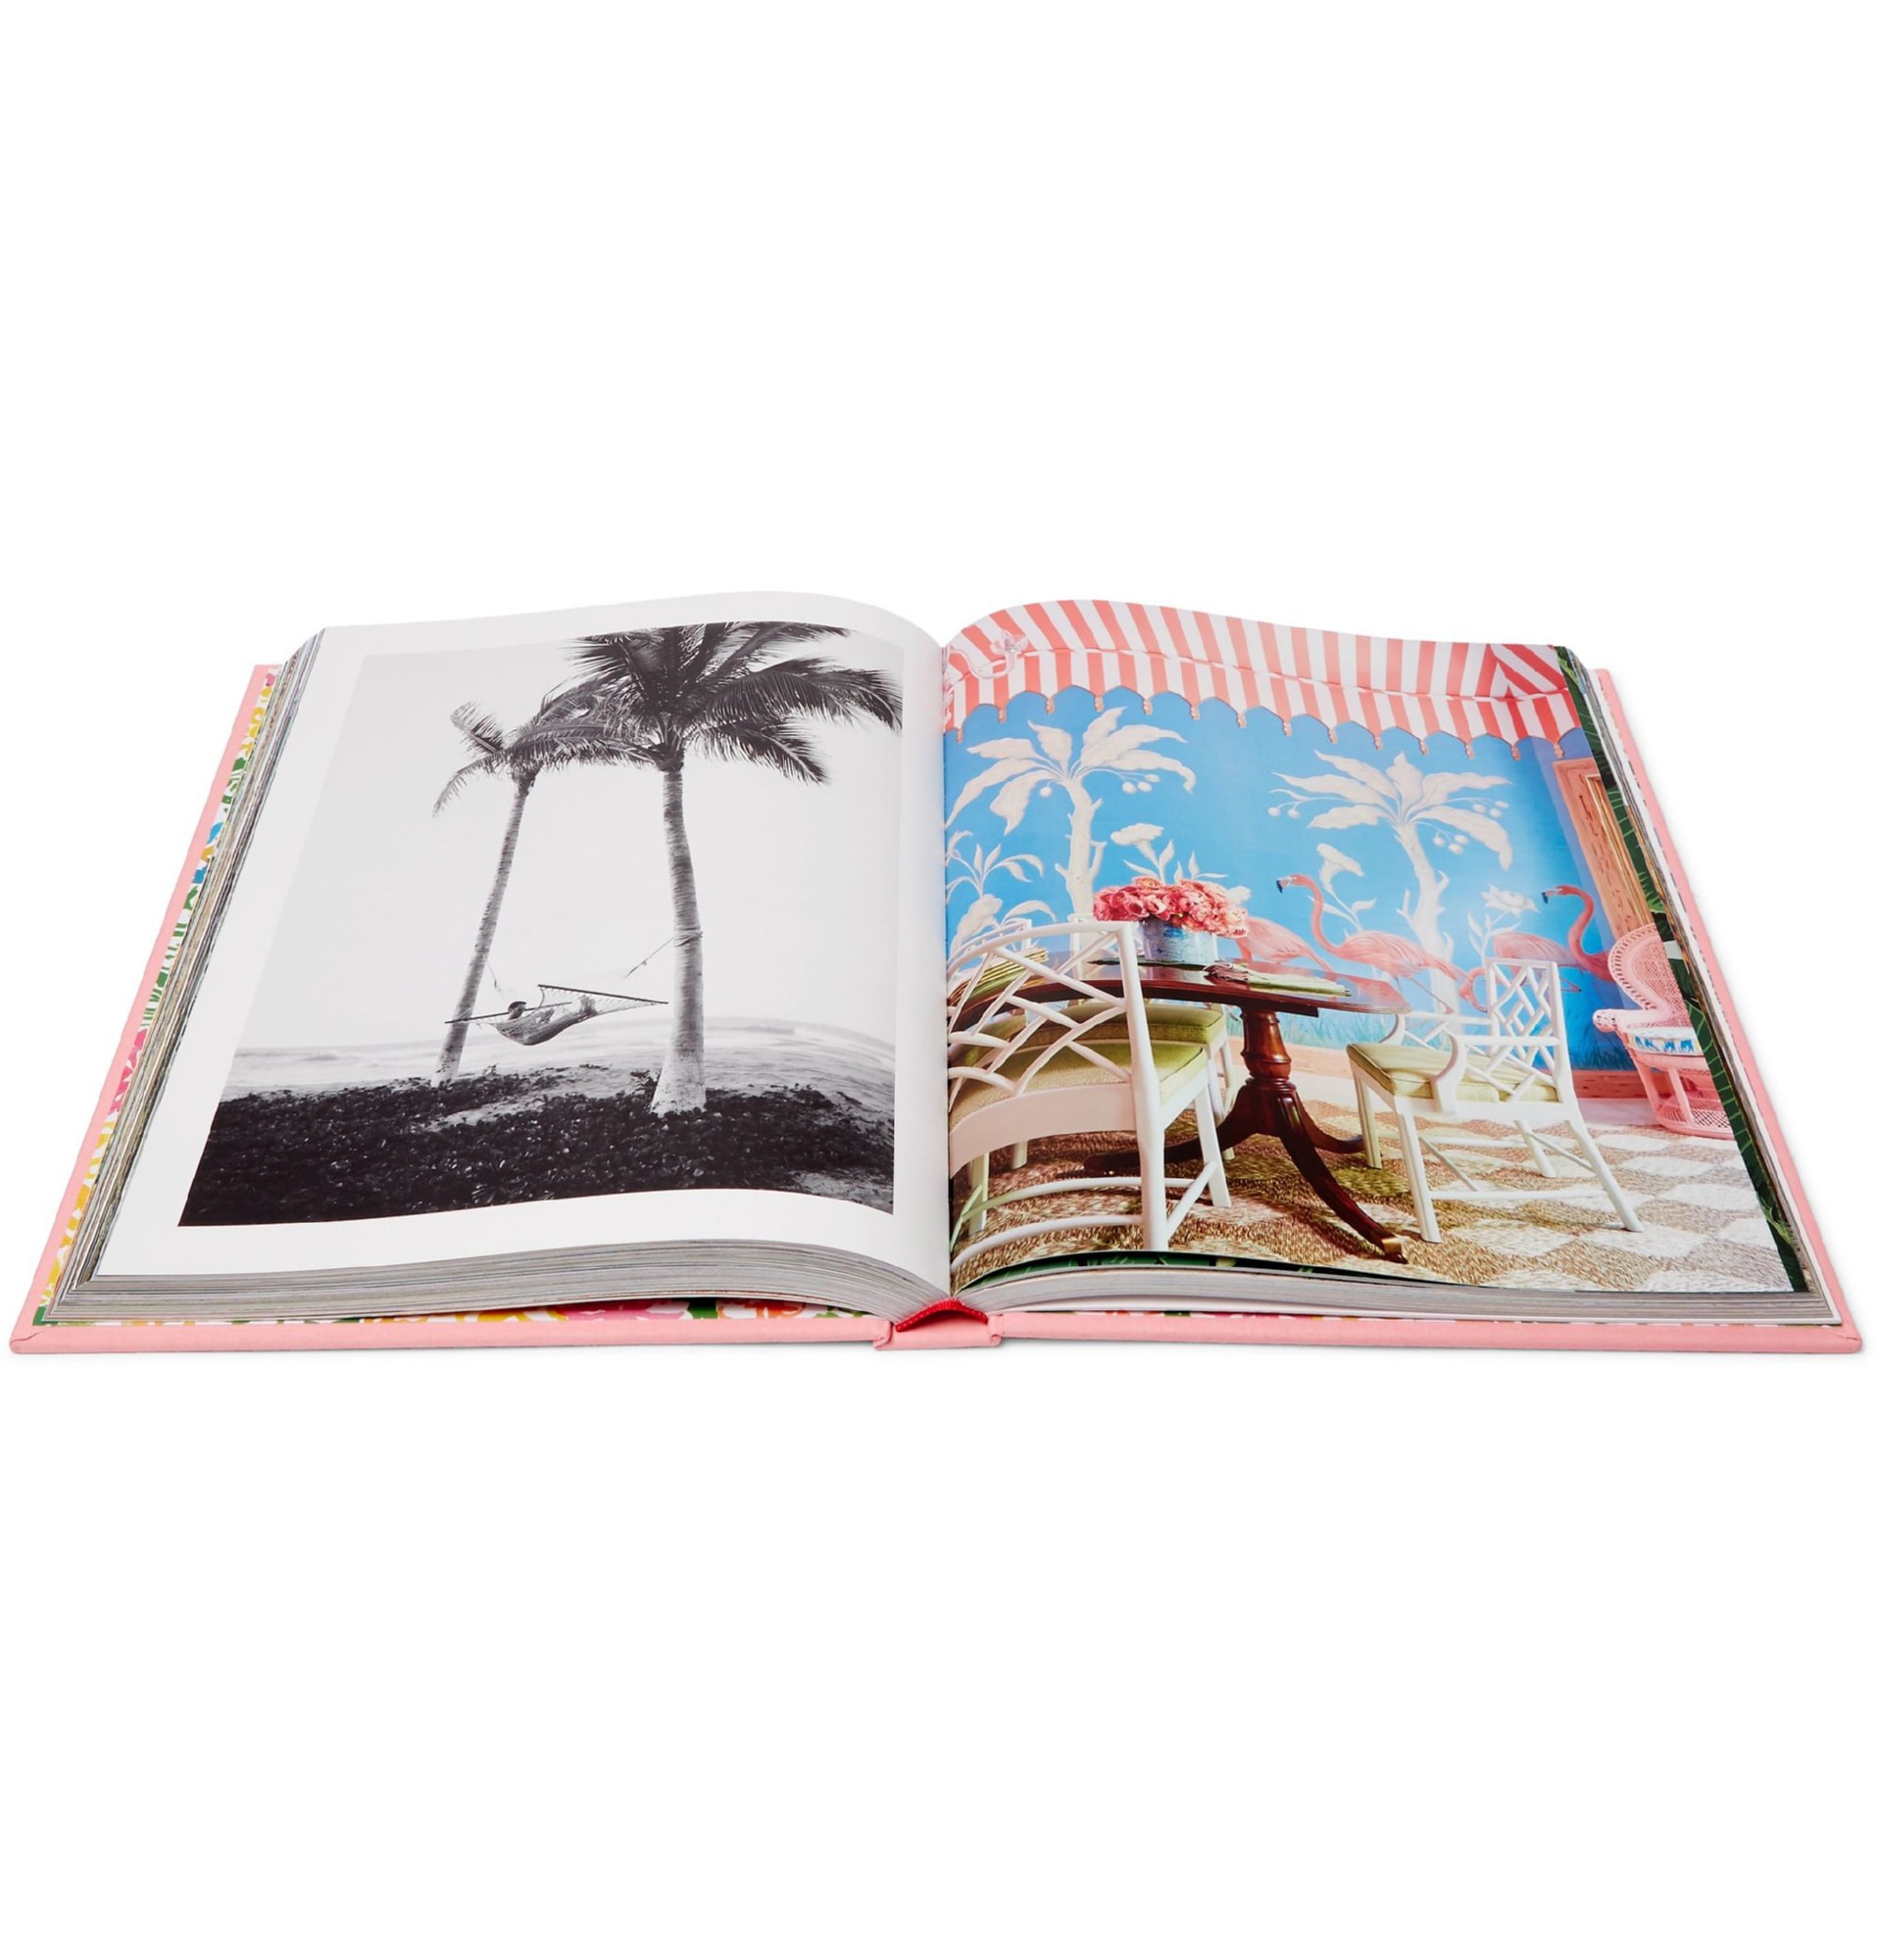 palm-beach-hardcover-book-16494023980220327